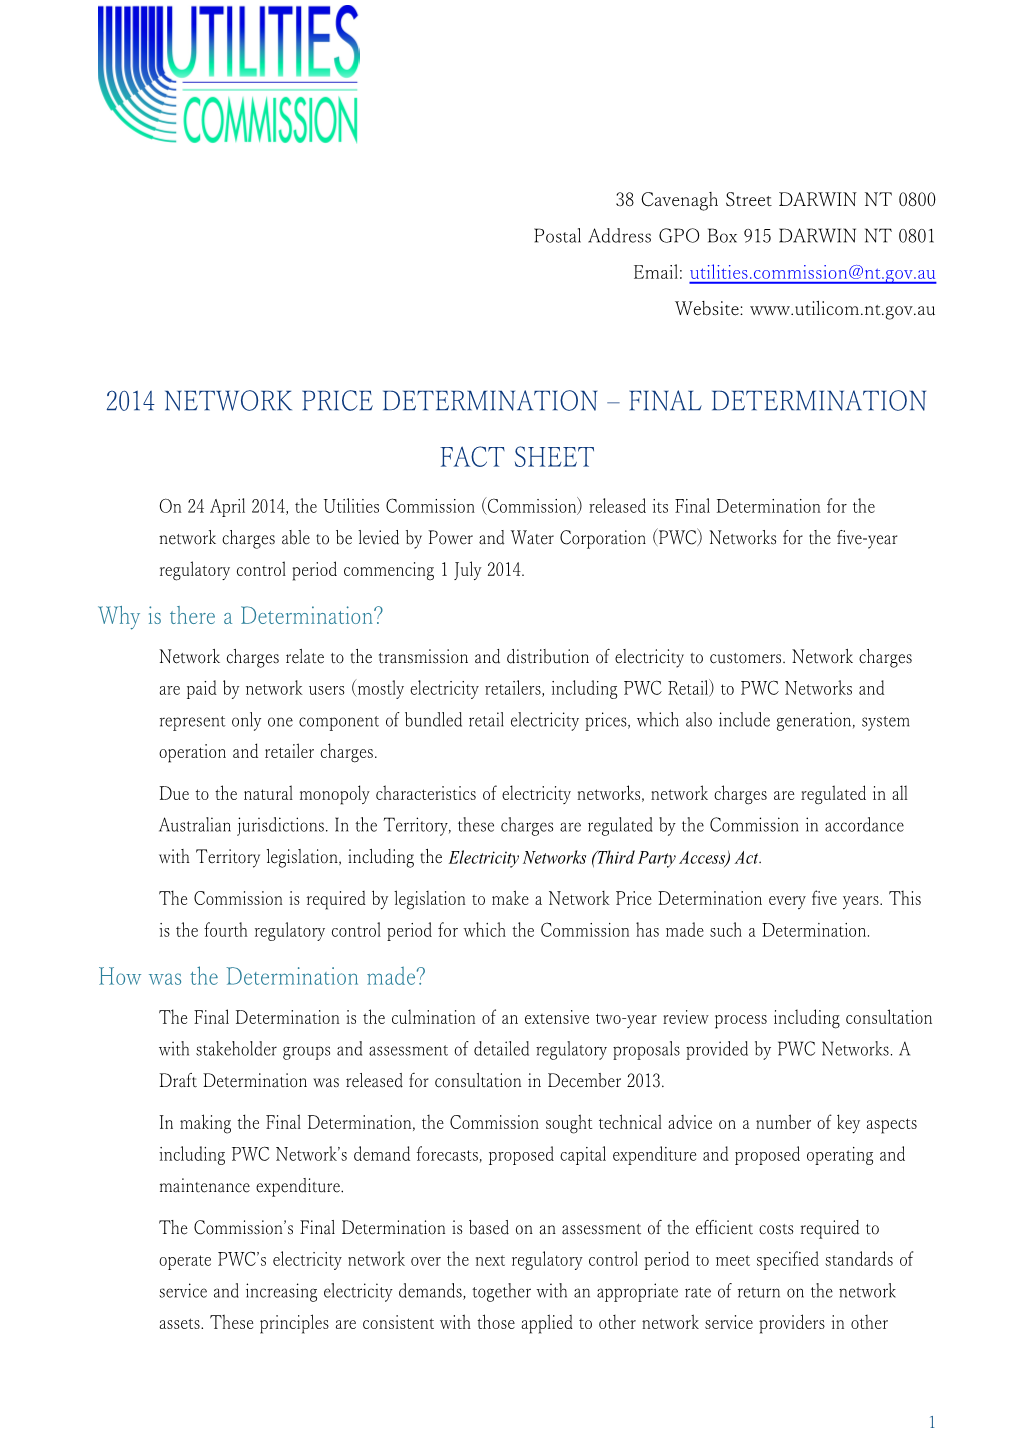 2014 Network Price Determination Fact Sheet